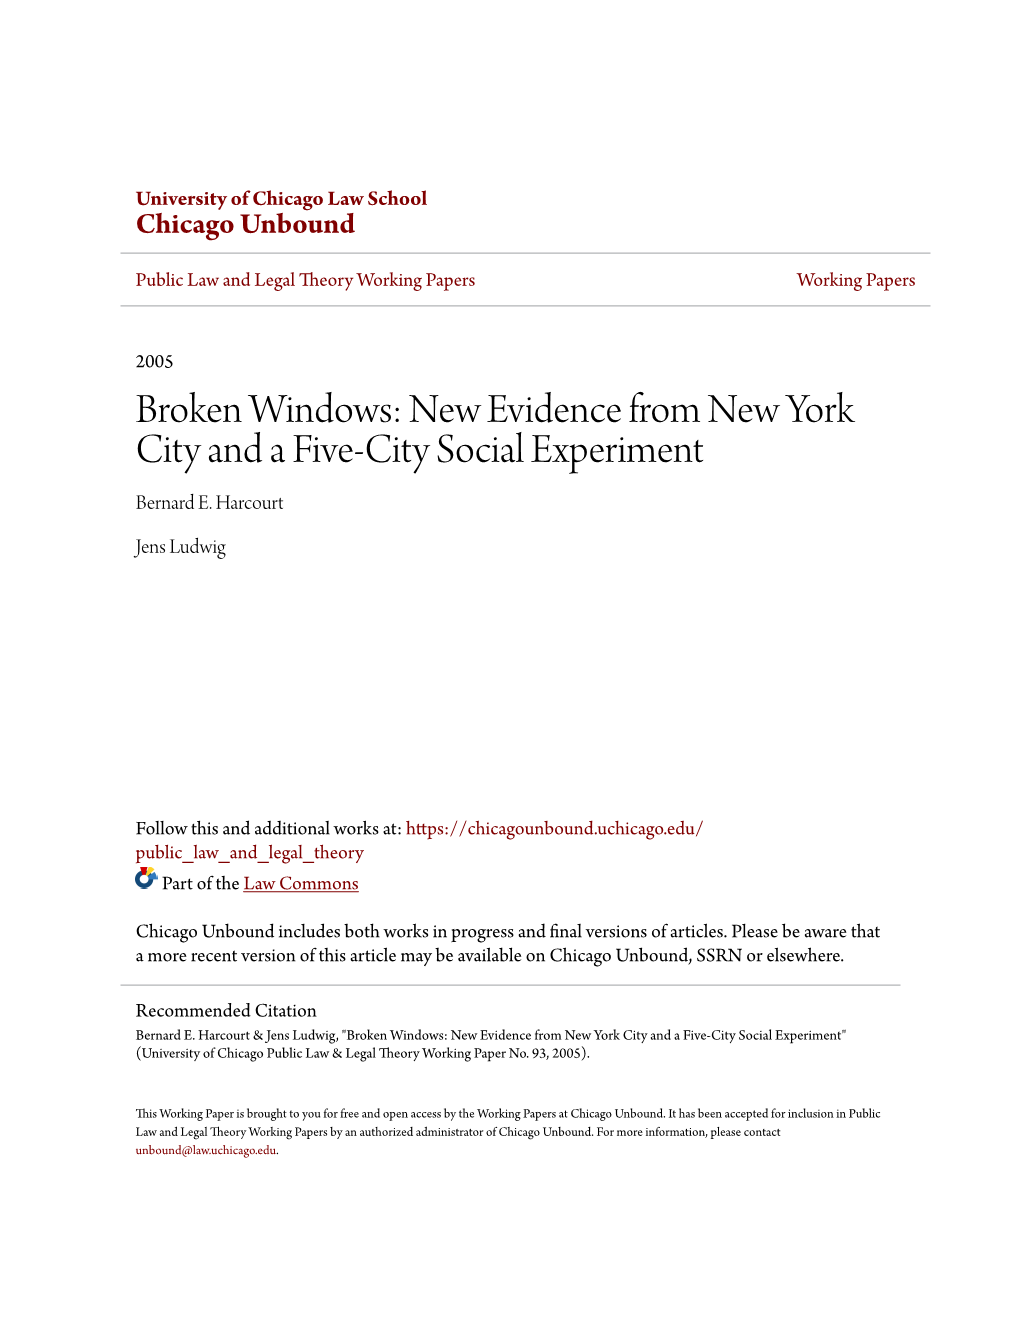 Broken Windows: New Evidence from New York City and a Five-City Social Experiment Bernard E